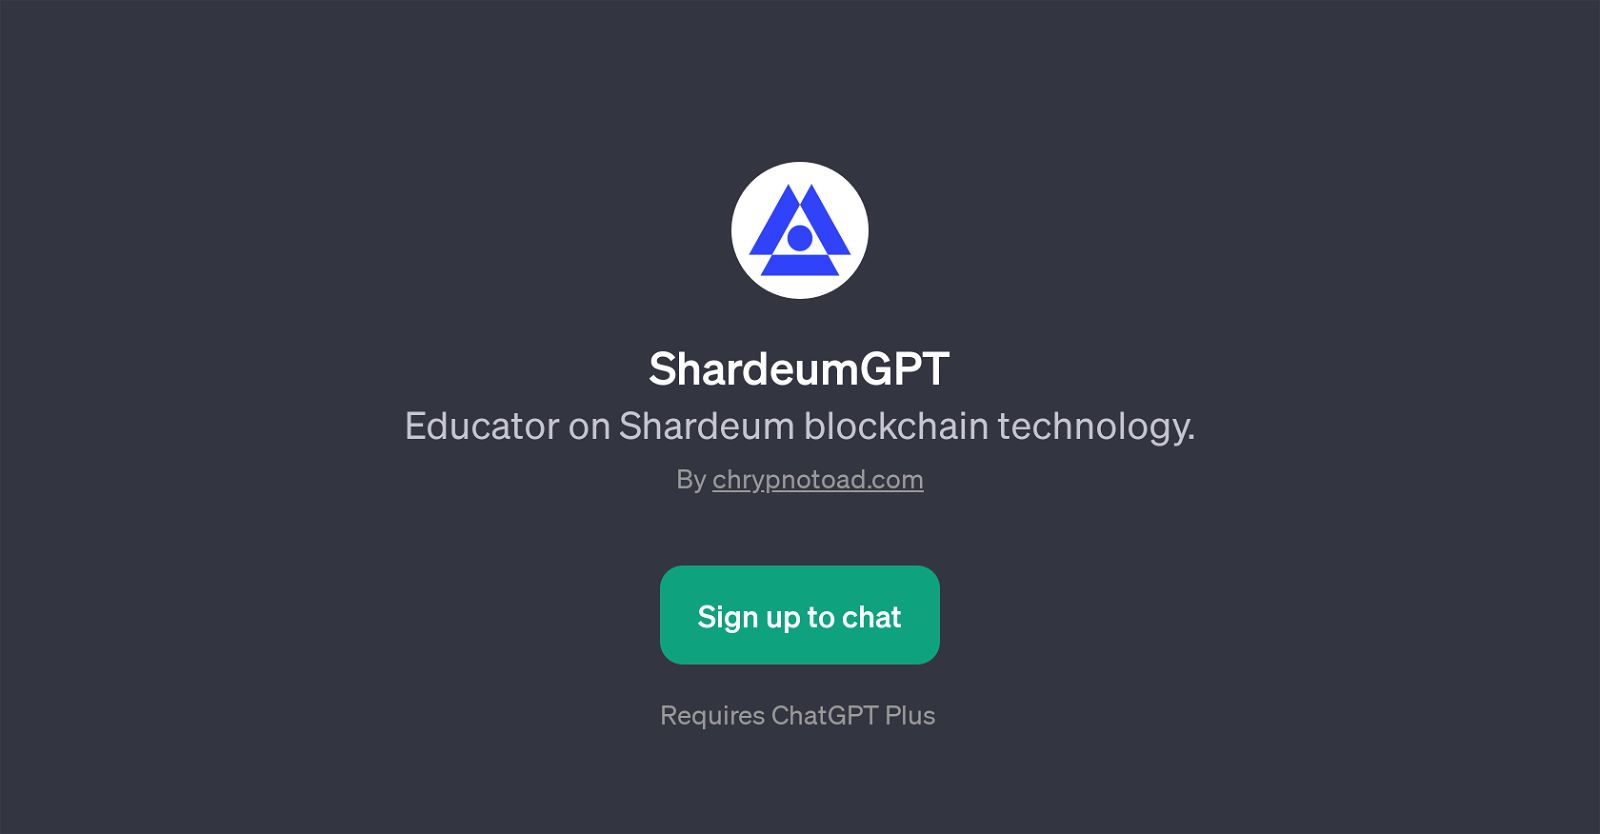 ShardeumGPT website